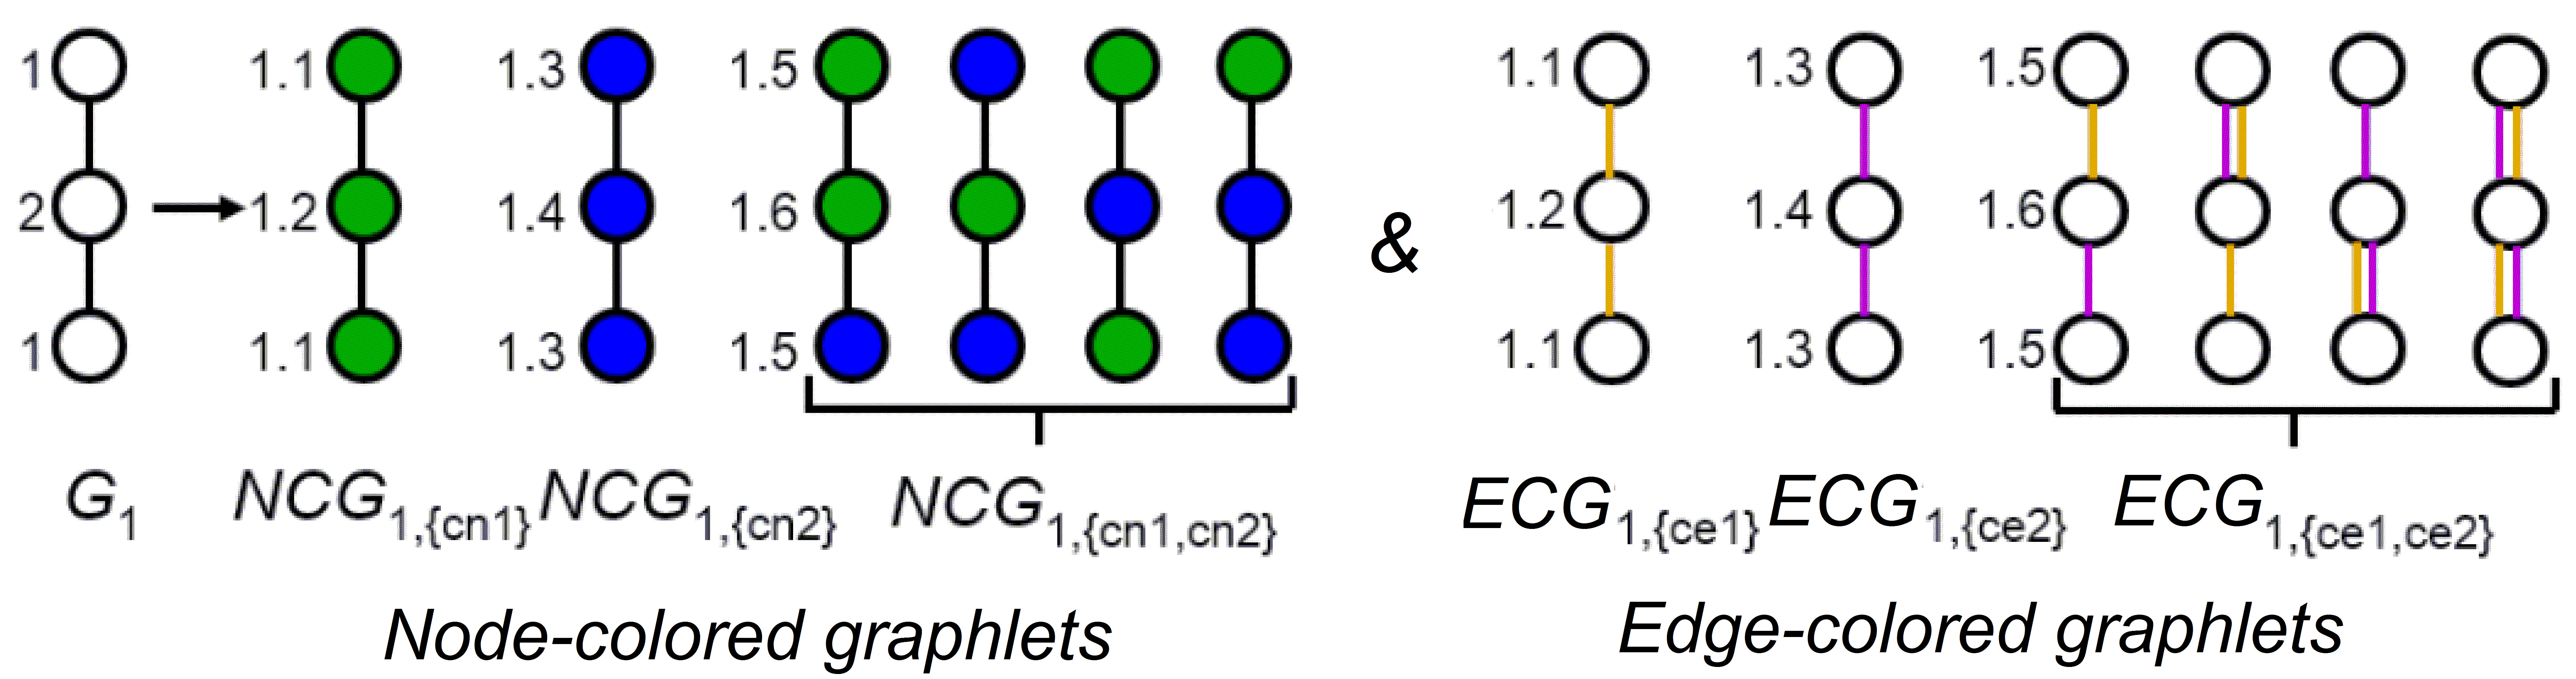 Figure 2. Illustration of node- and edge-colored graphlets